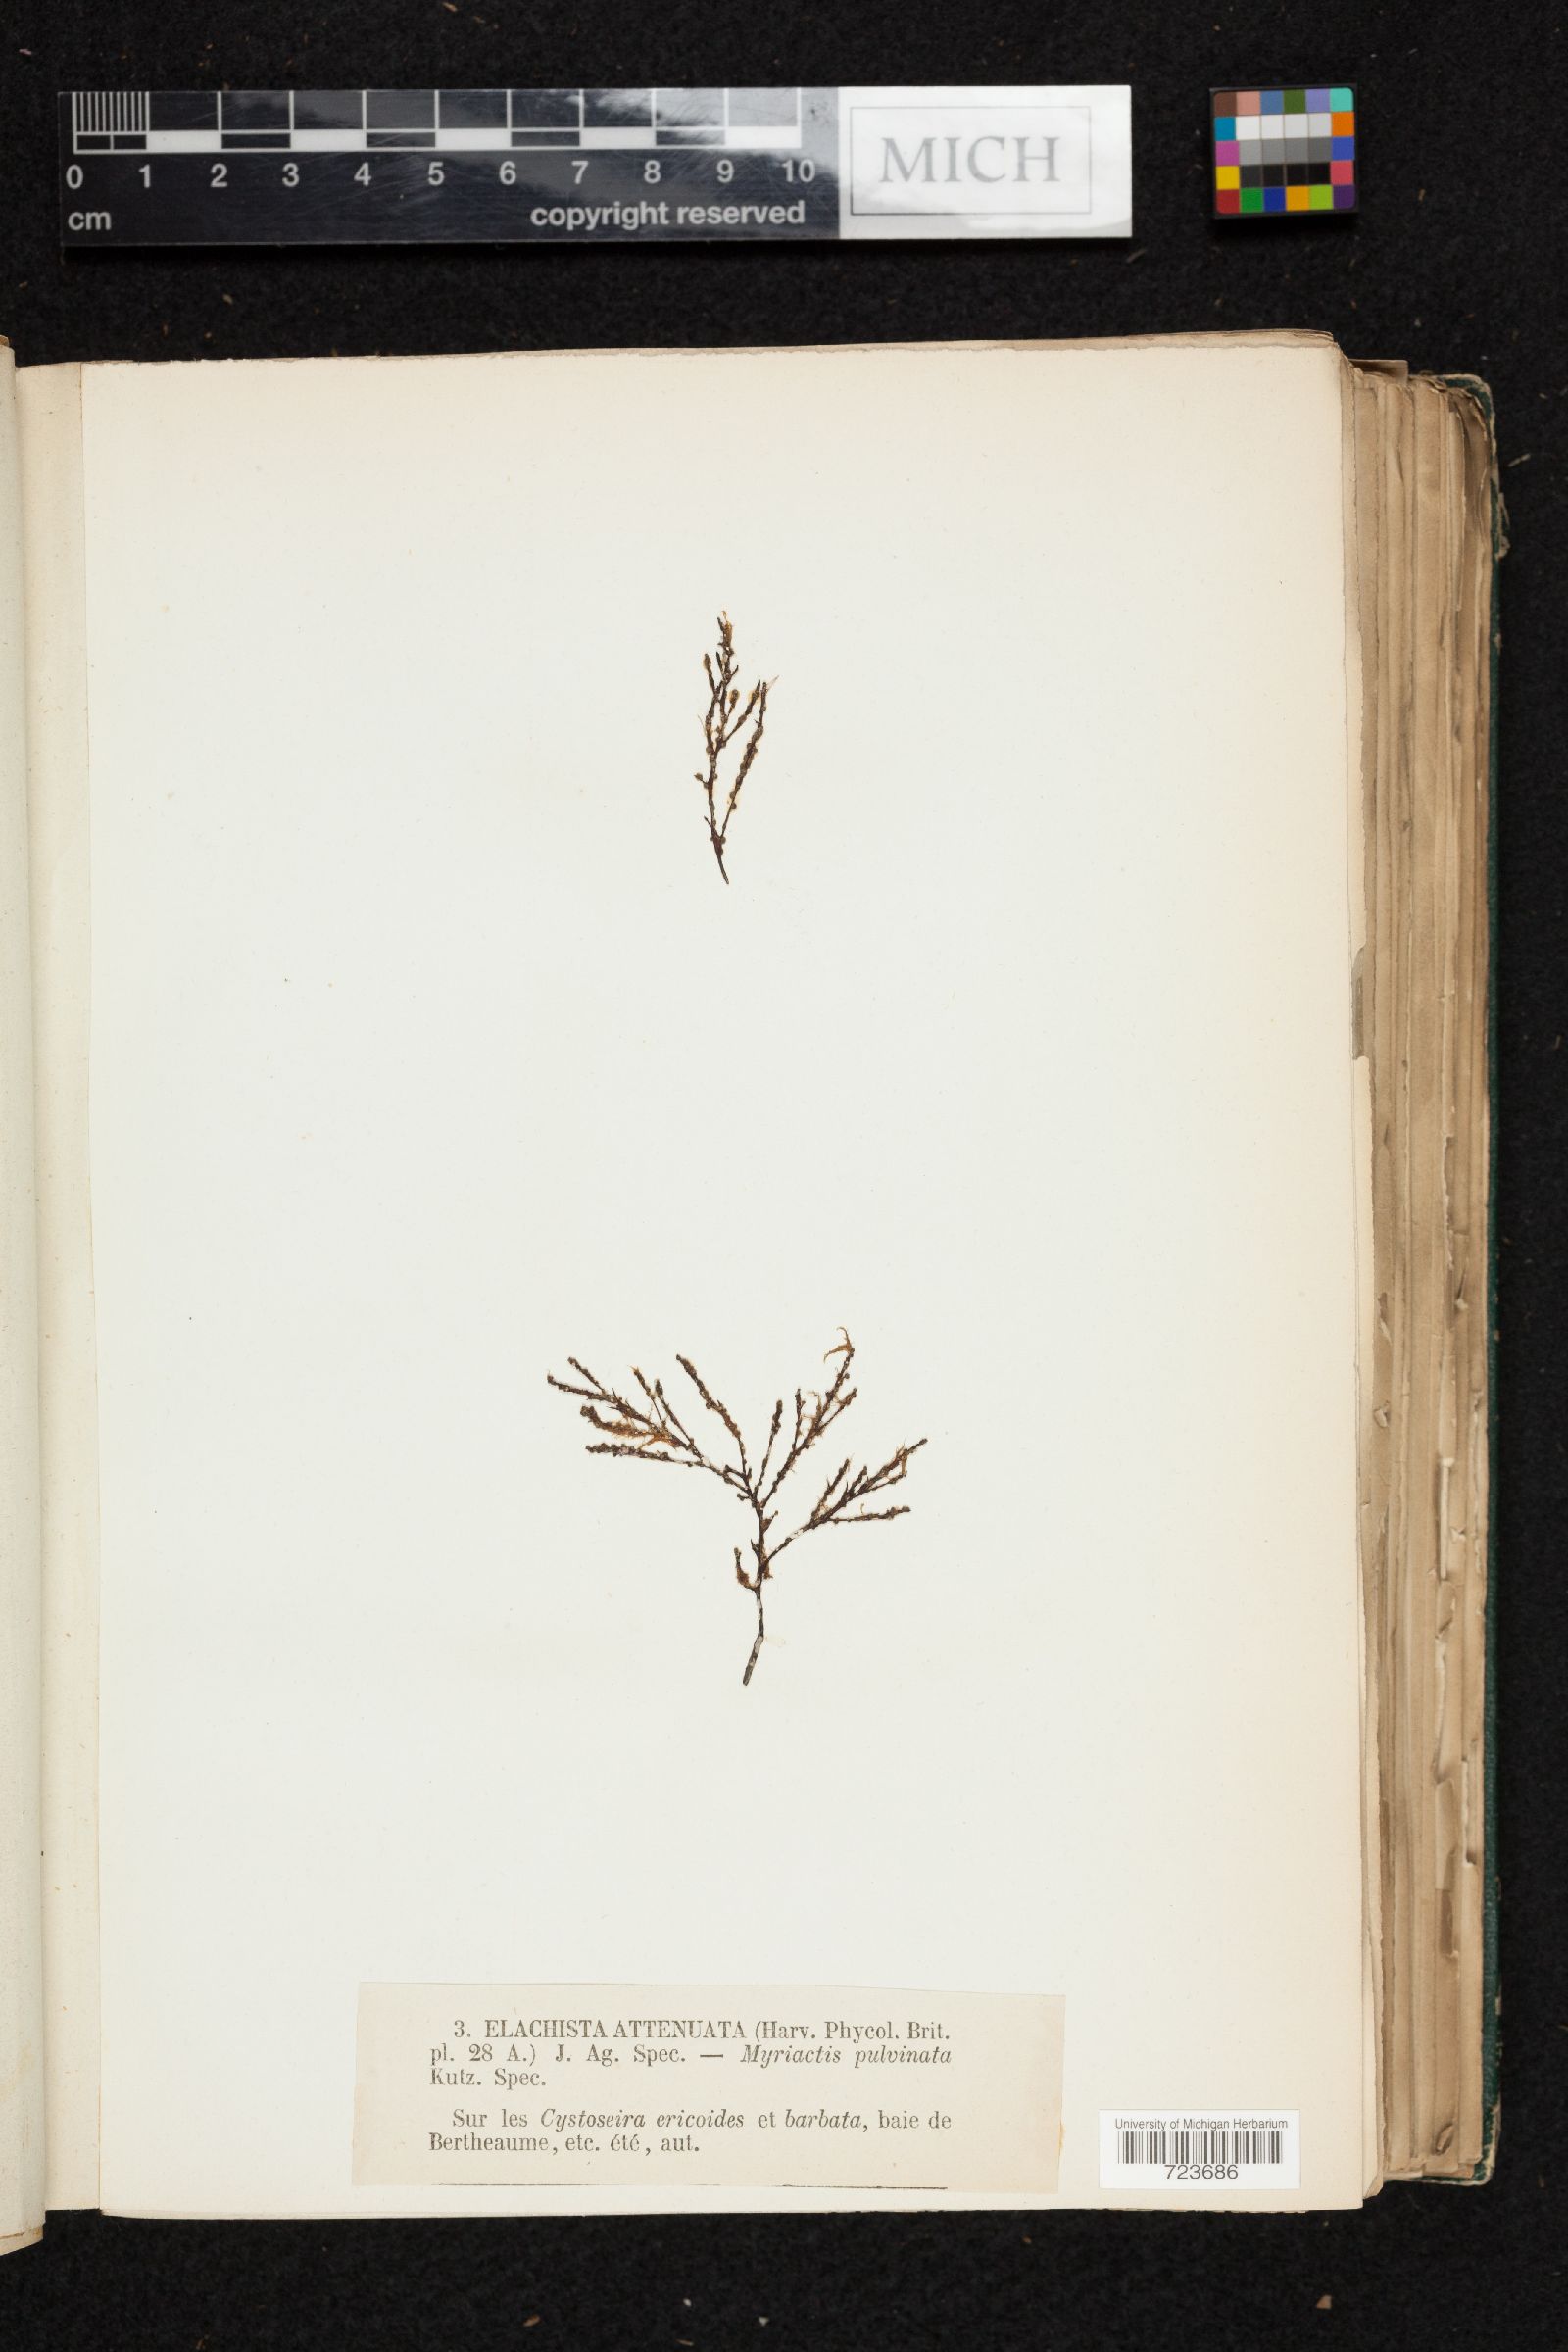 Myriactula rivulariae image